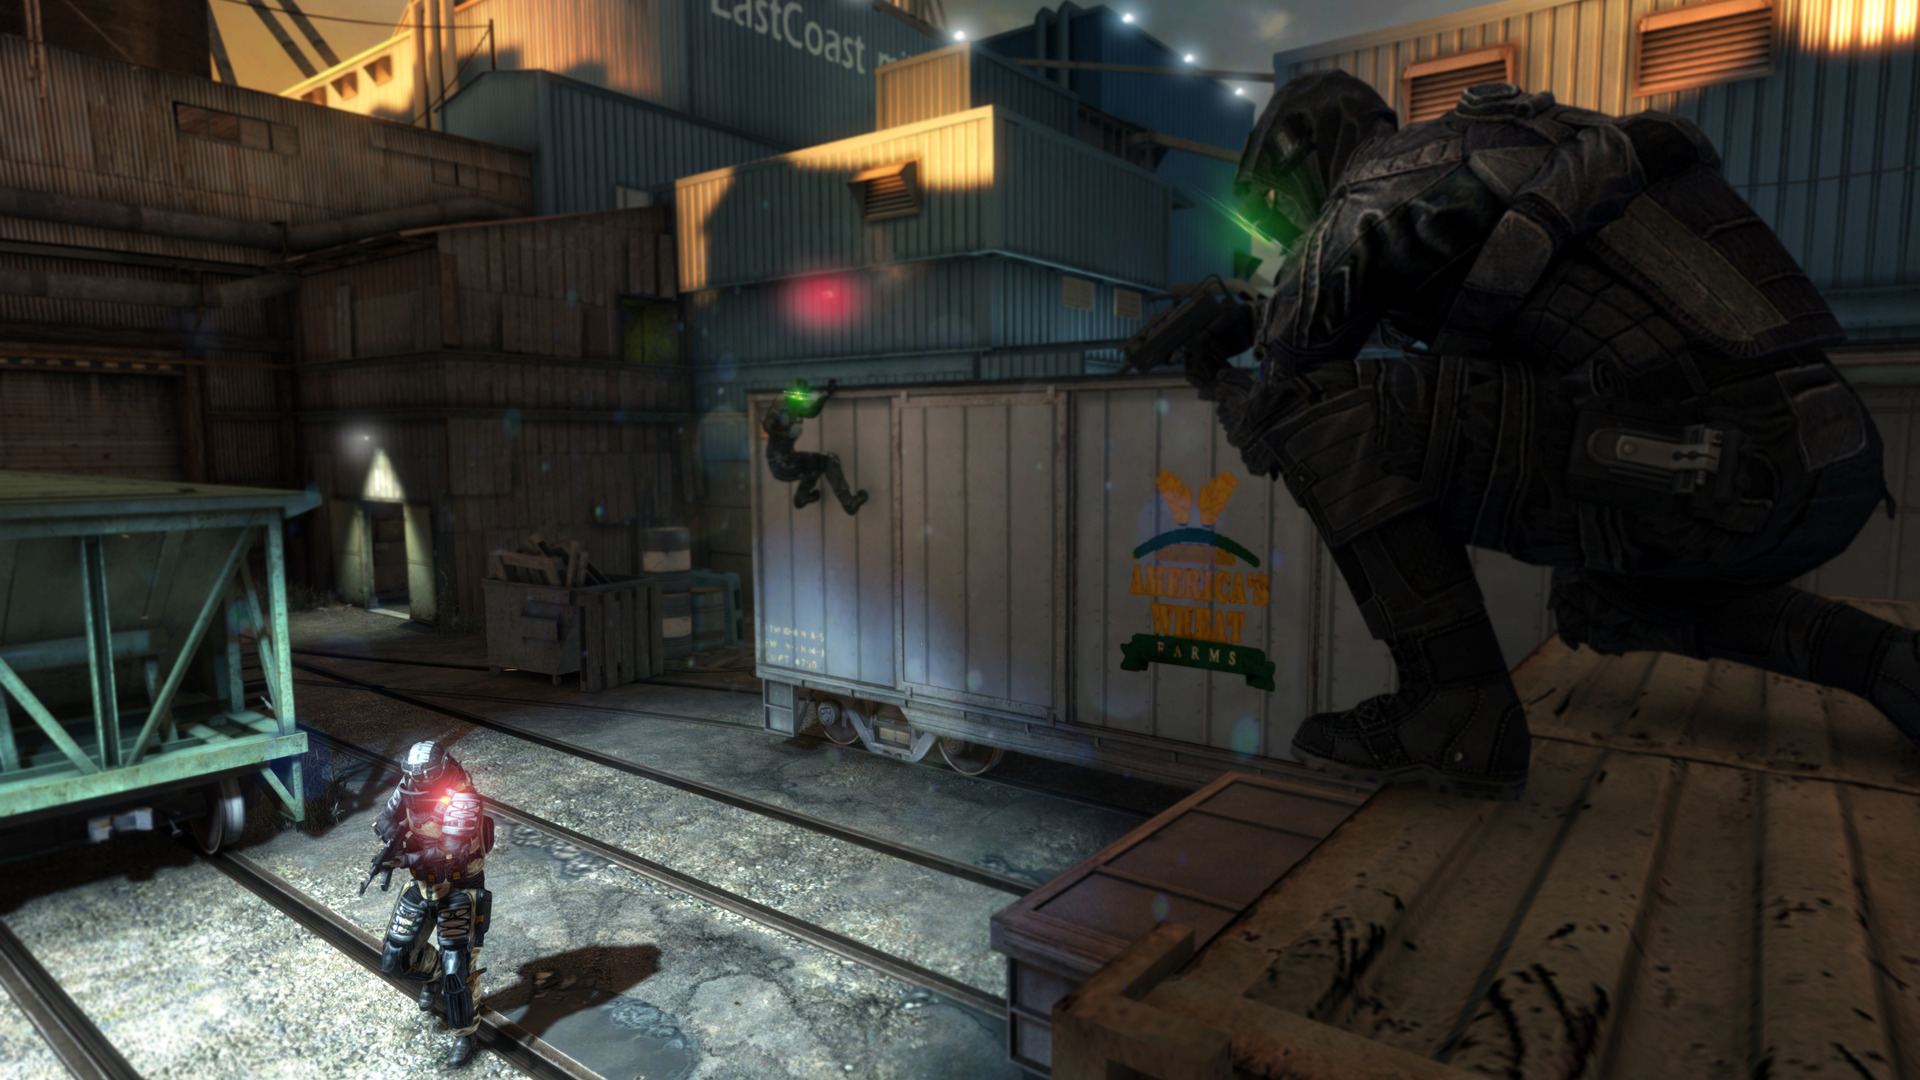 Gambar dari game Splinter Cell lama